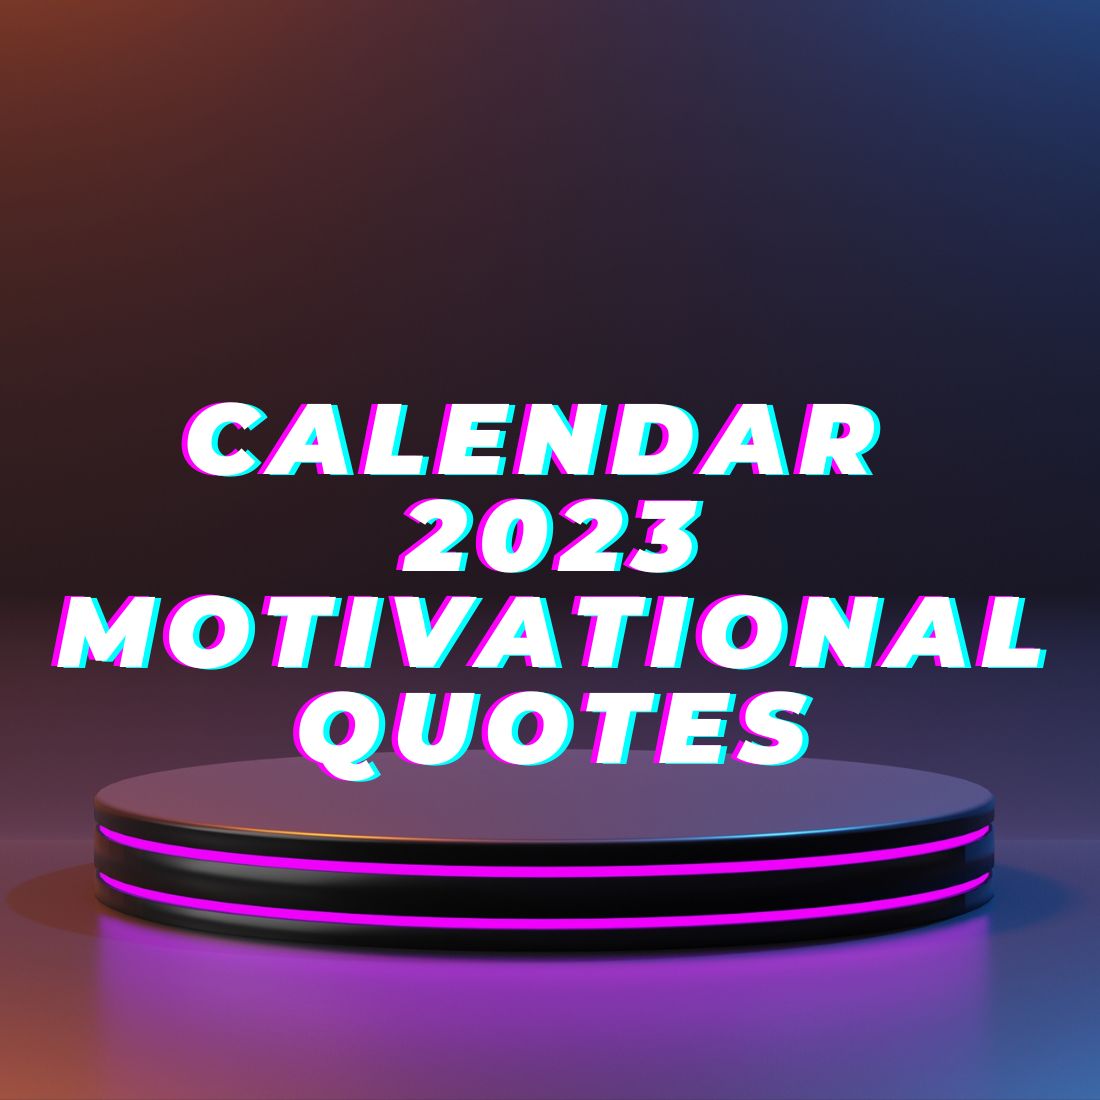 Calendar Motivational Quotes cover image.